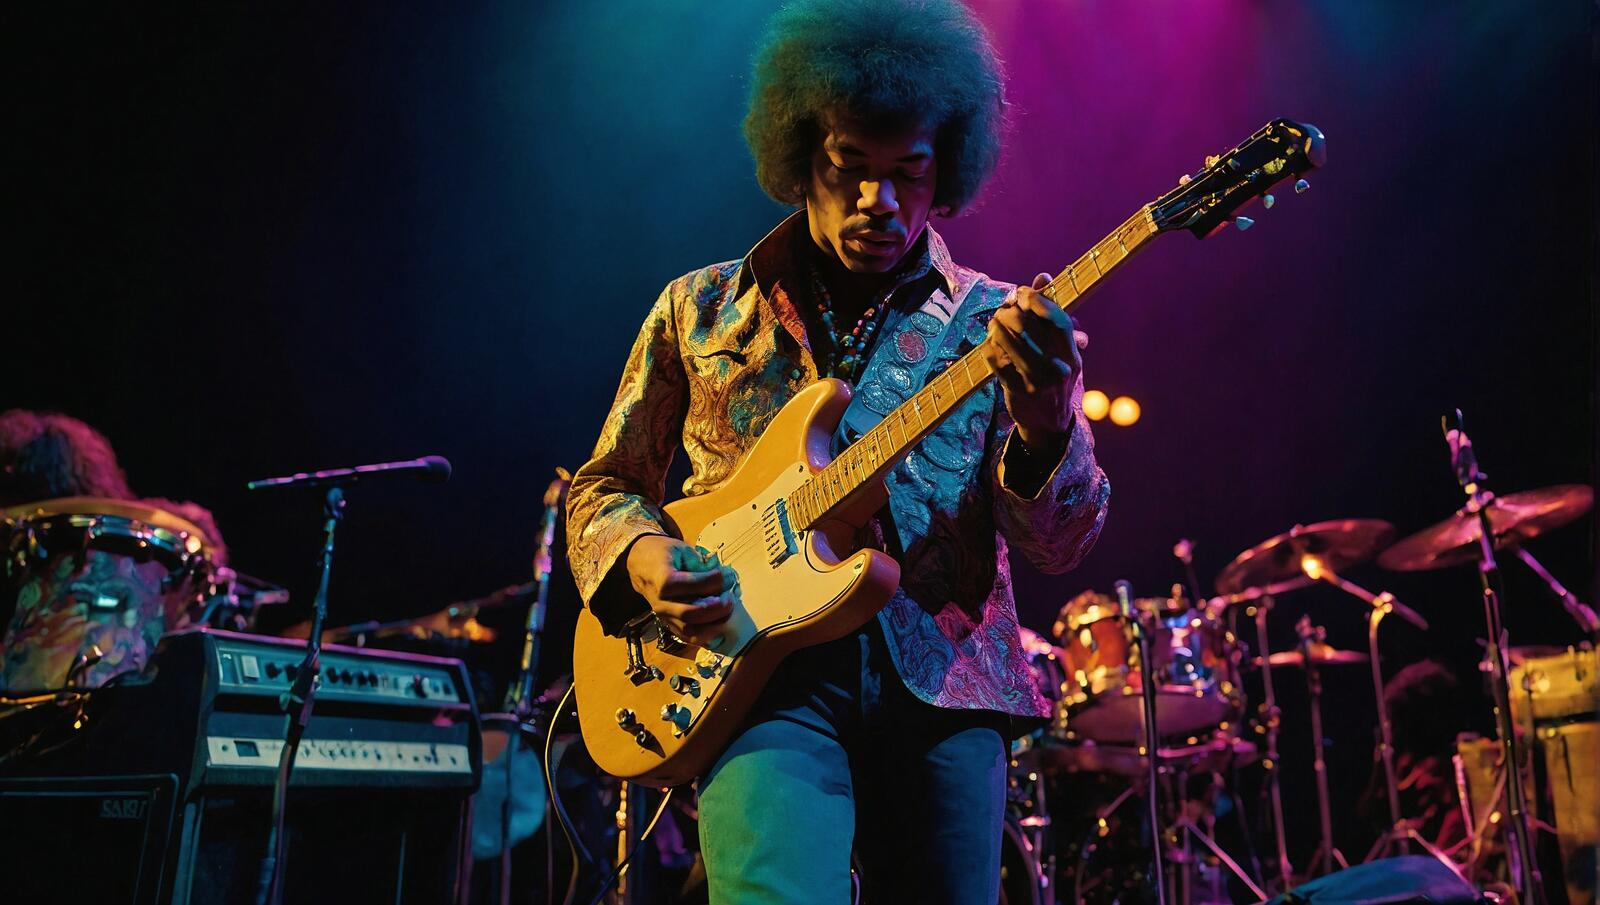 Бесплатное фото Мужчина на сцене играет на гитаре на фоне фиолетового света